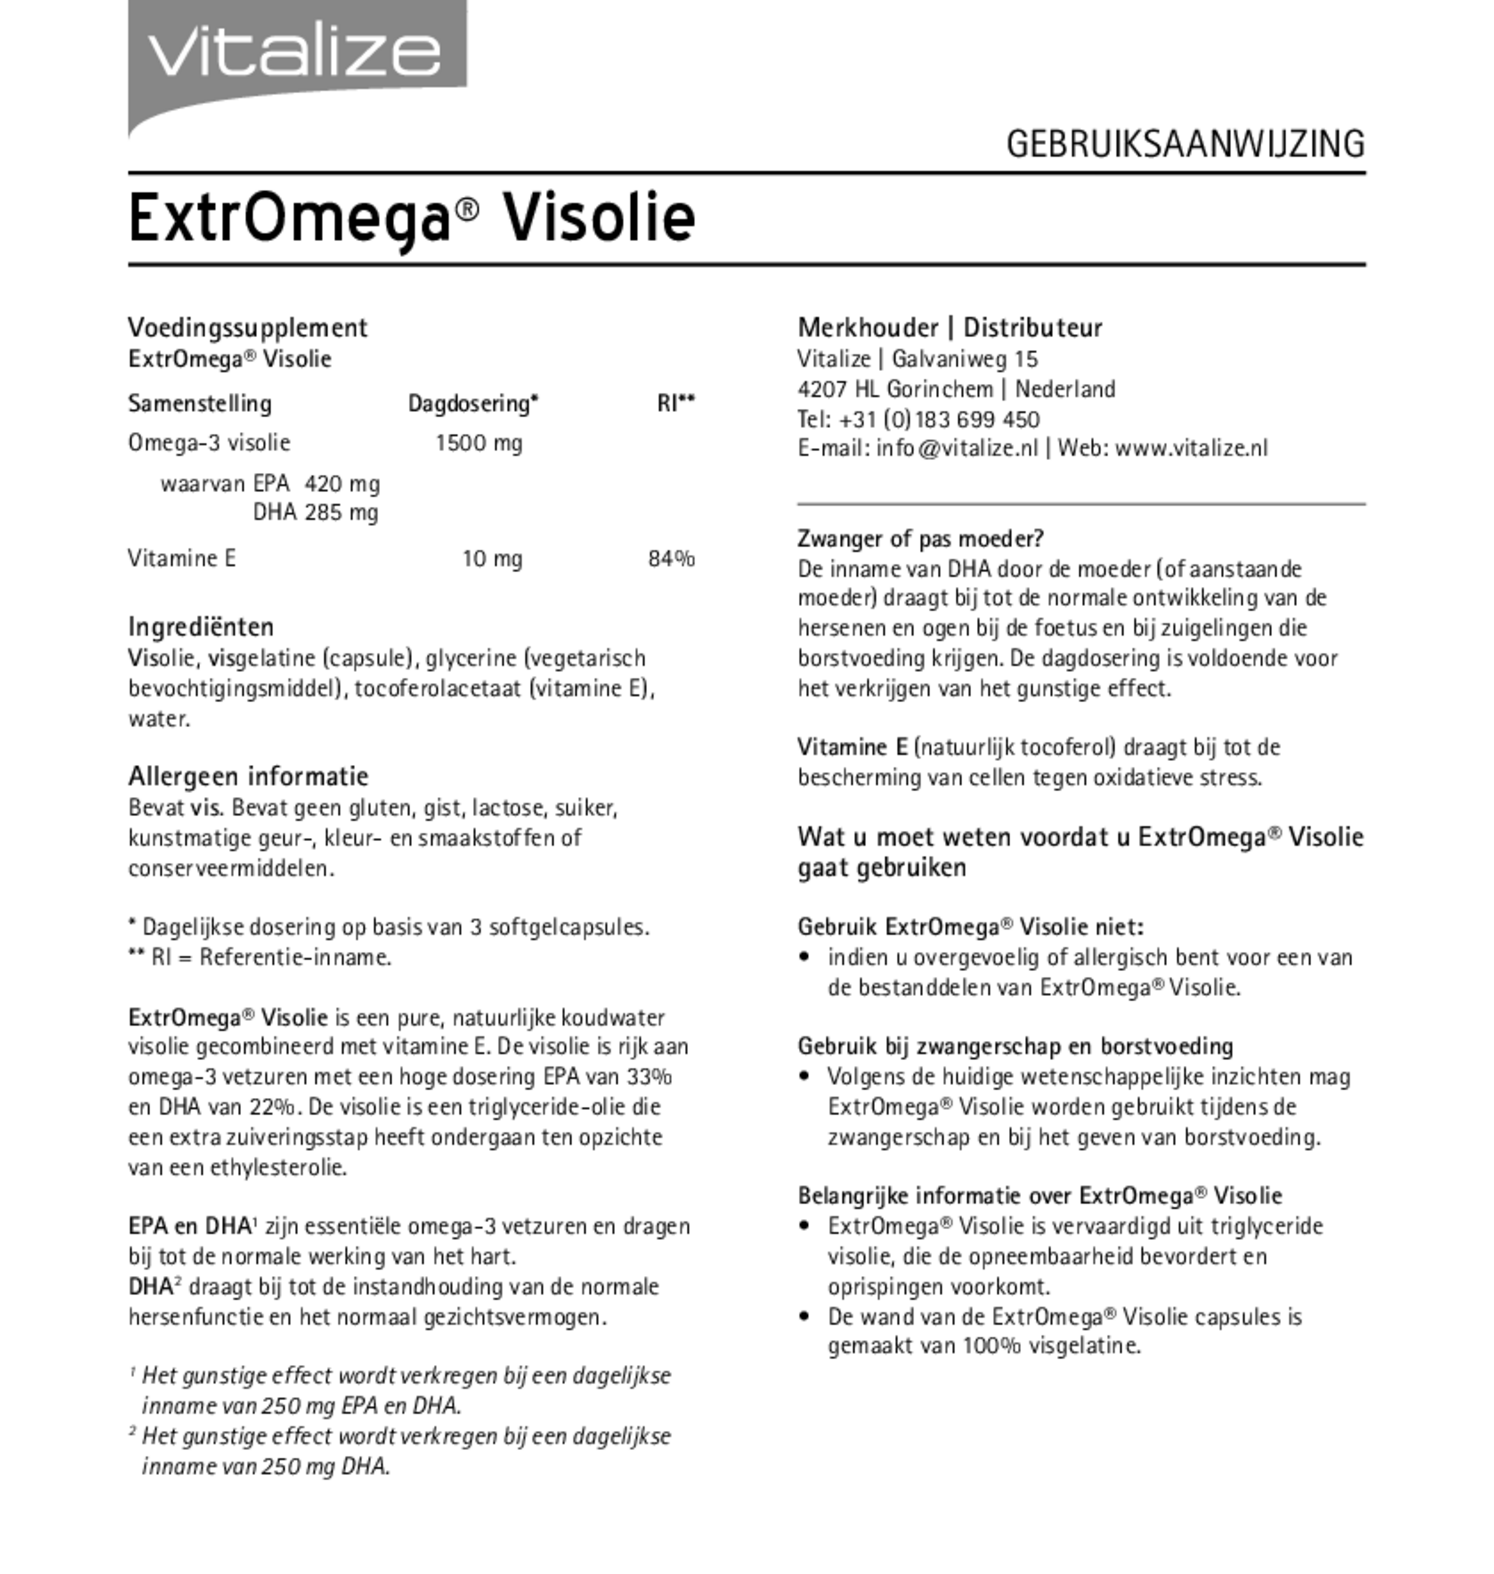 ExtrOmega Omega 3 Voordeel Capsules afbeelding van document #1, gebruiksaanwijzing